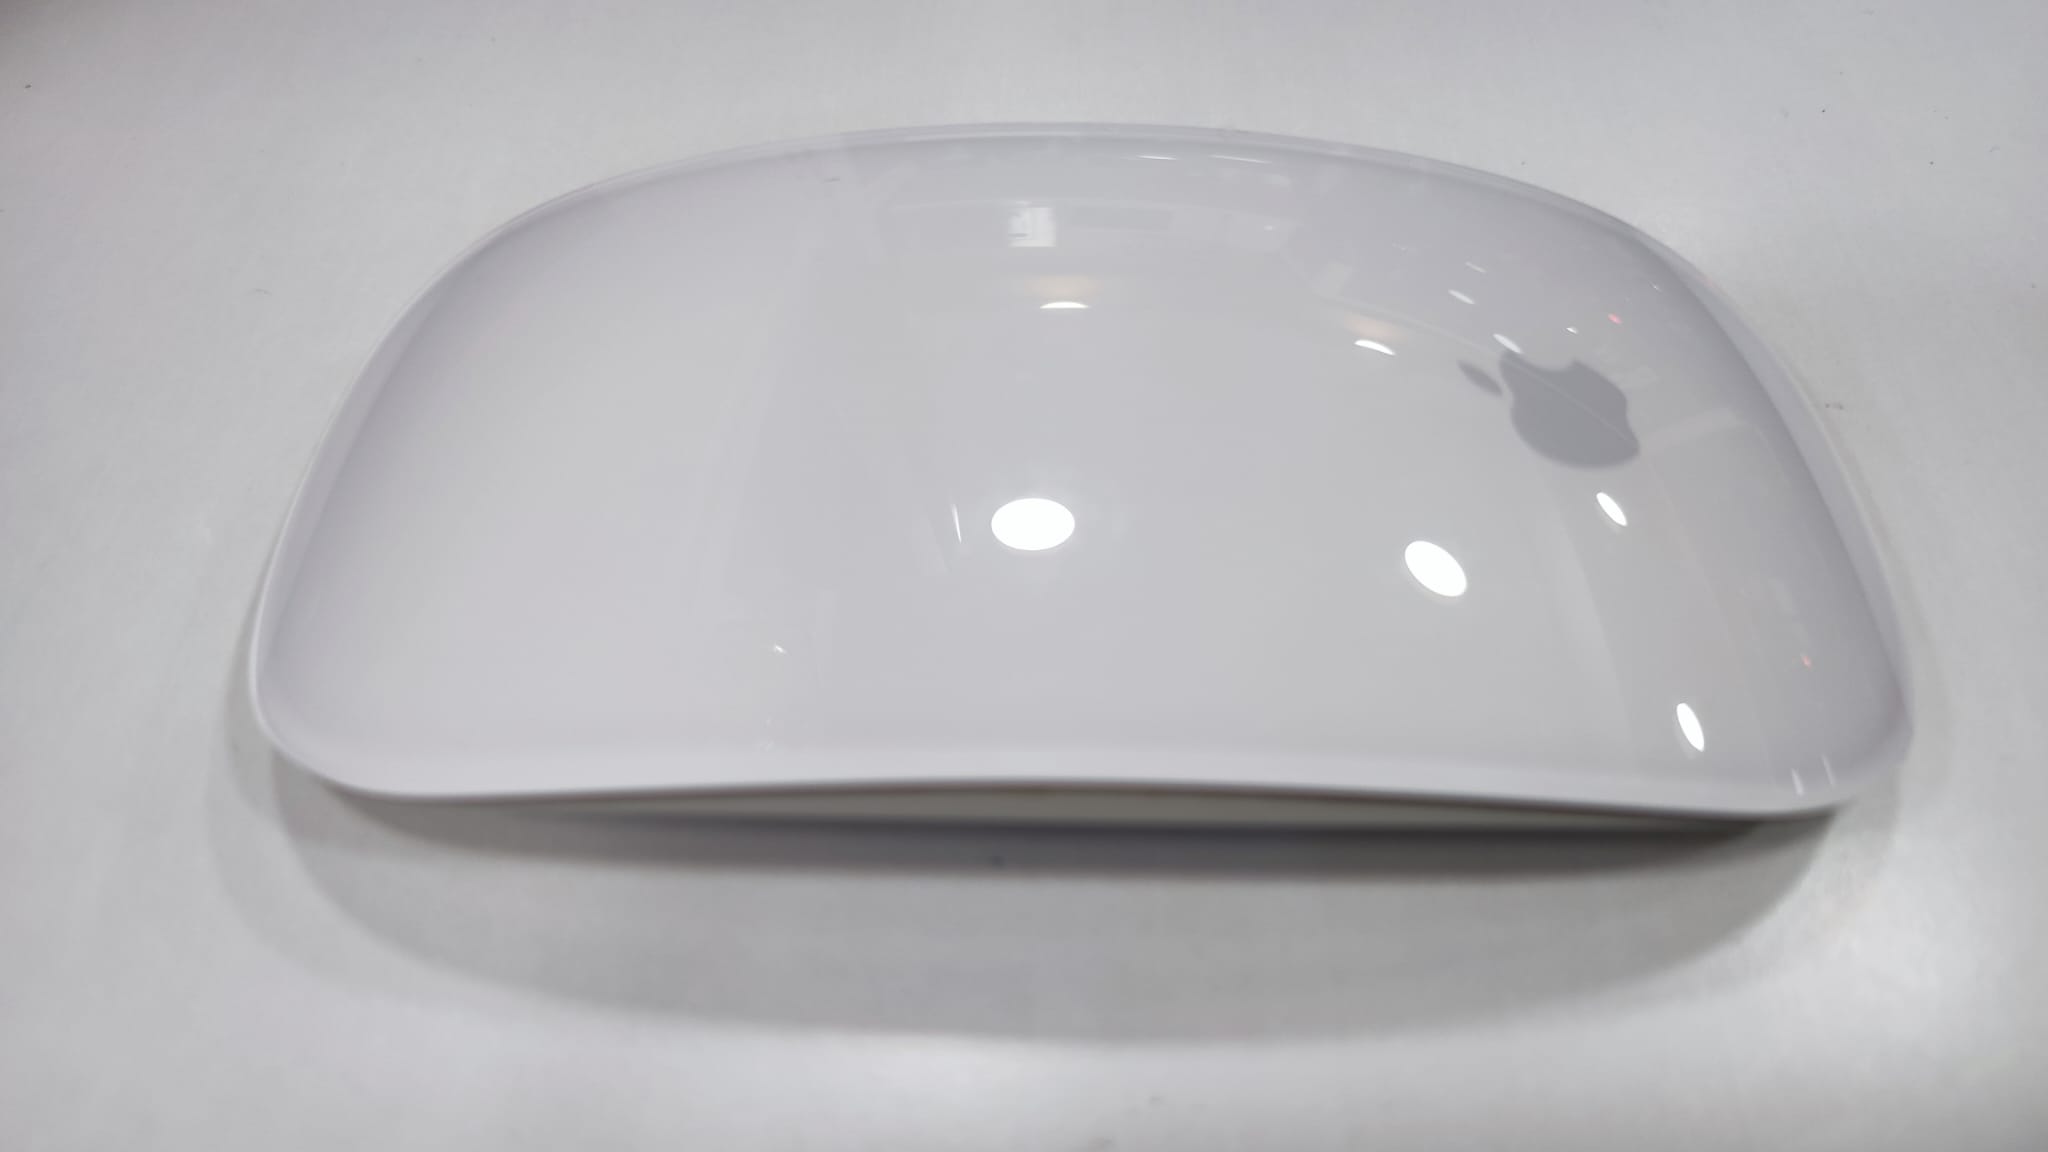 Apple Magic Mouse 2 : : Informática